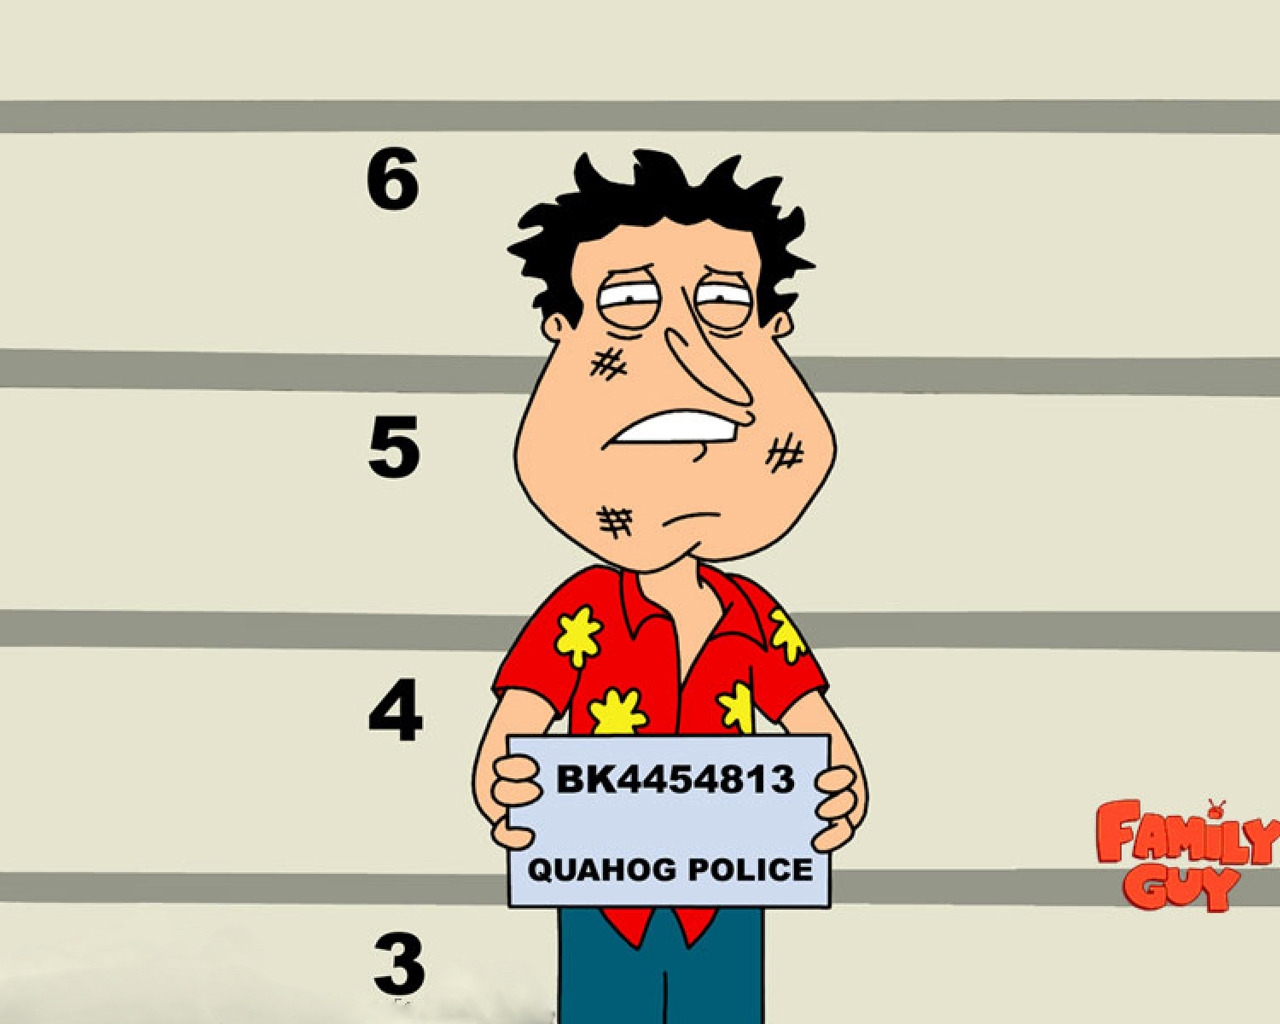 Family Guy Quagmire for 1280 x 1024 resolution